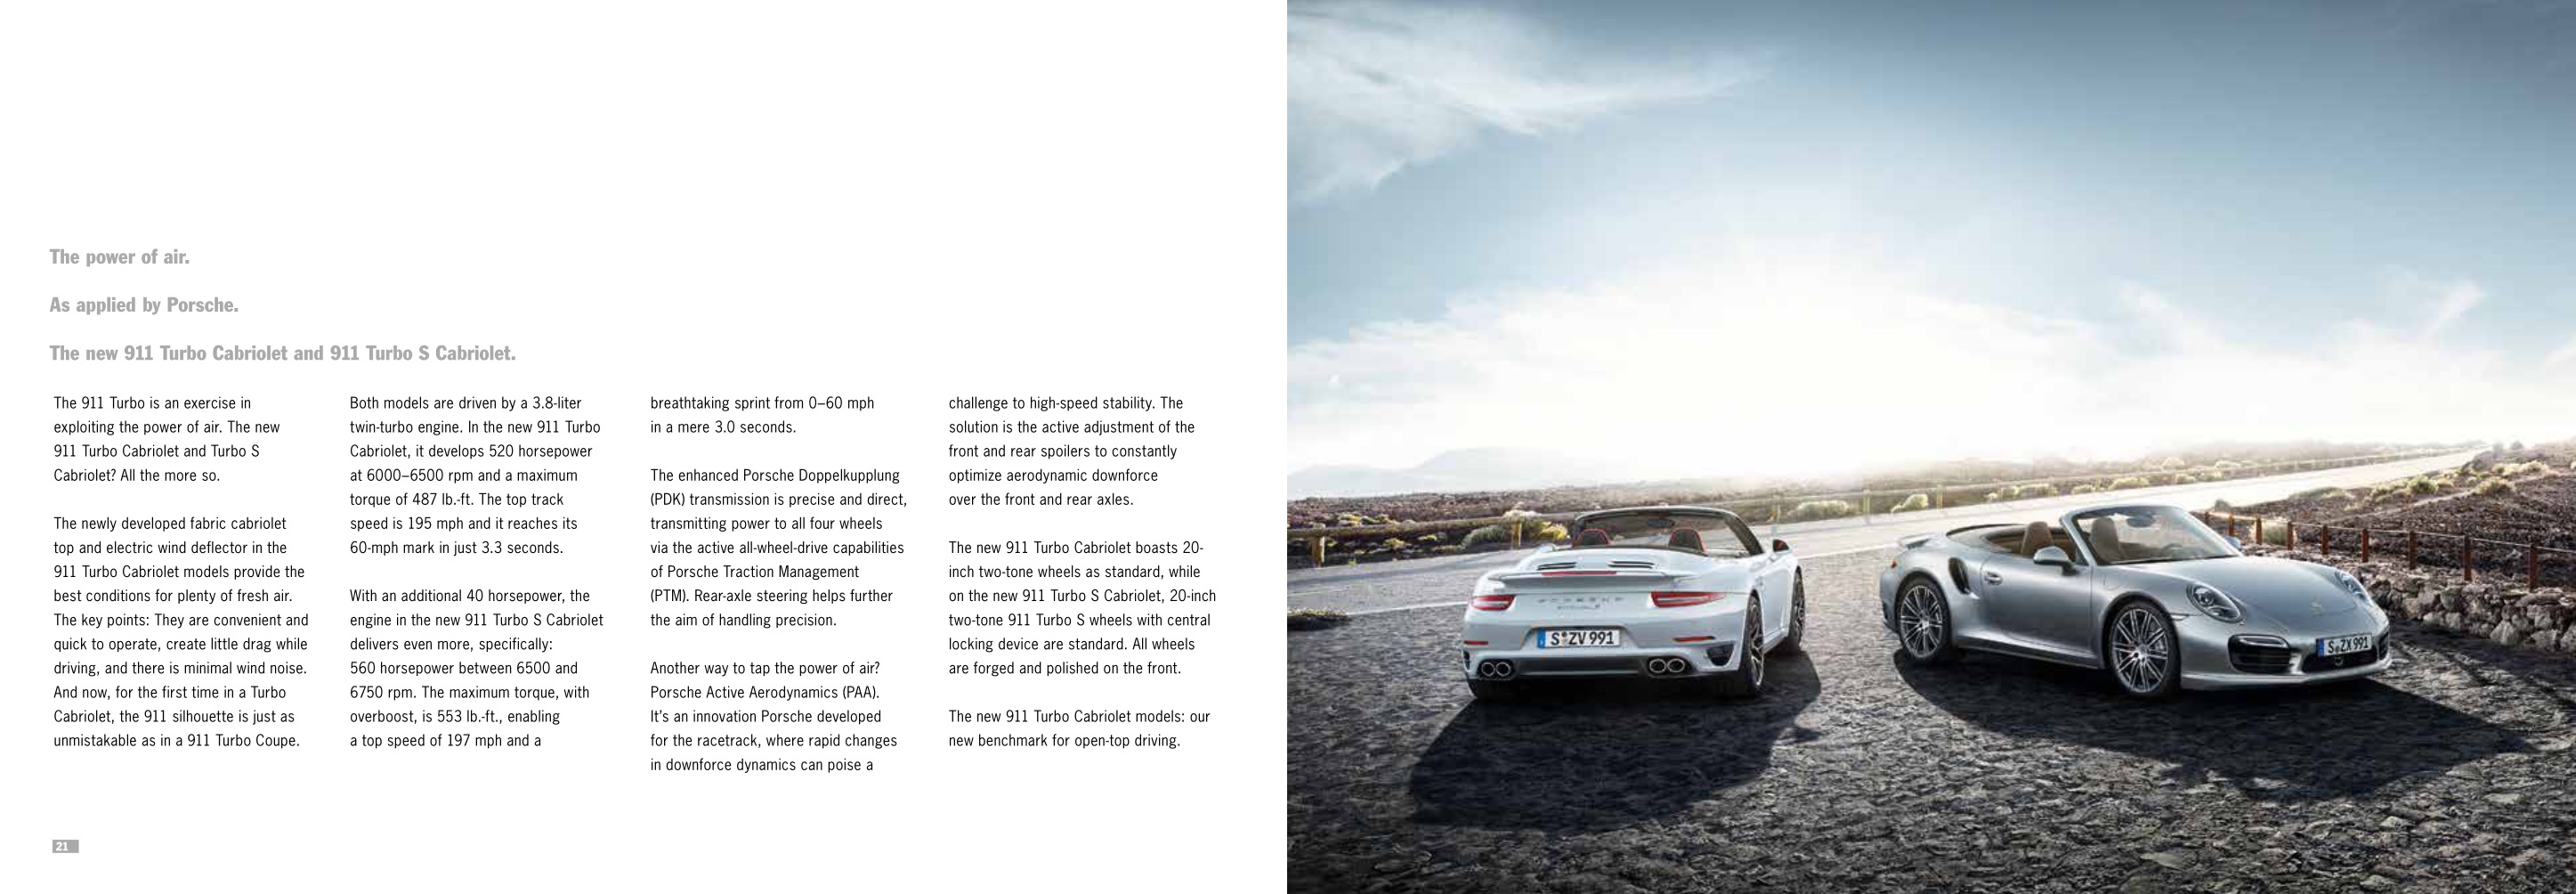 2014 Porsche 911 Turbo Brochure Page 20